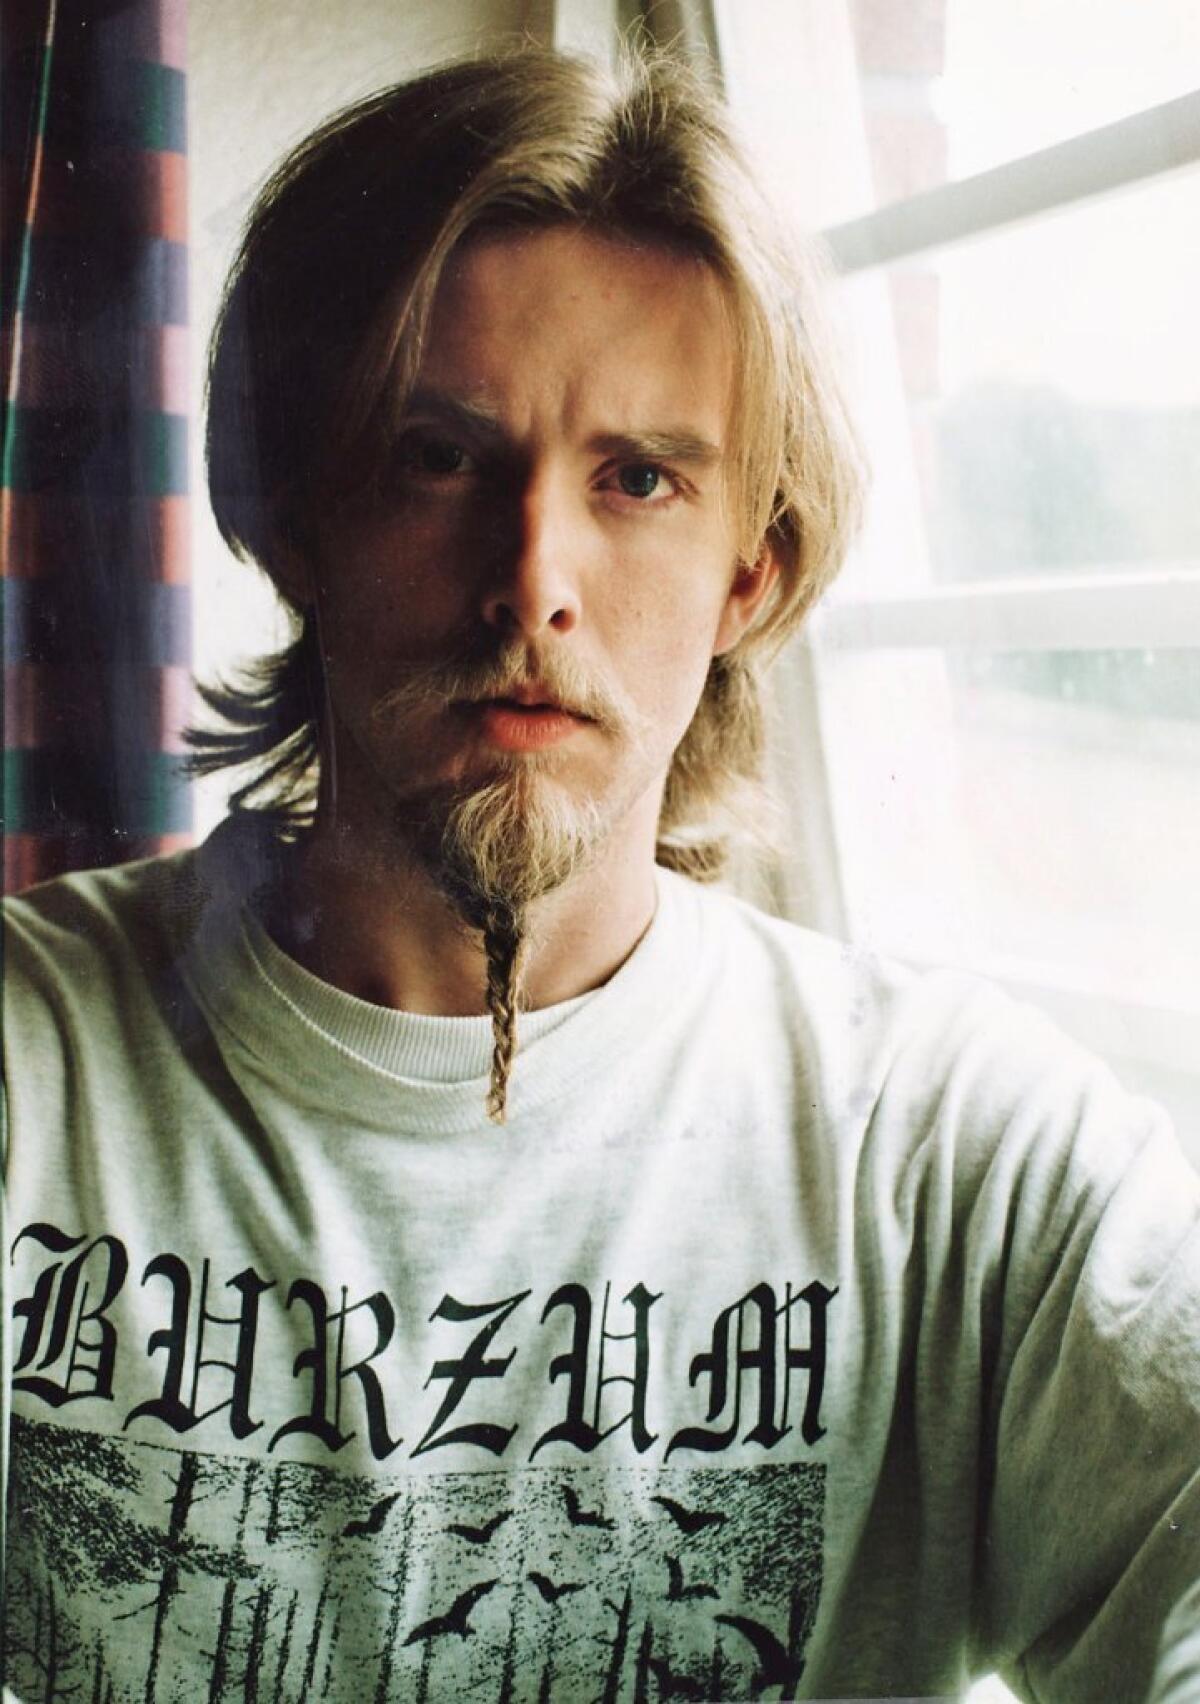 Varg Vikernes, shown in 1999, is said to be a fan of mass killer Anders Behring Breivik.